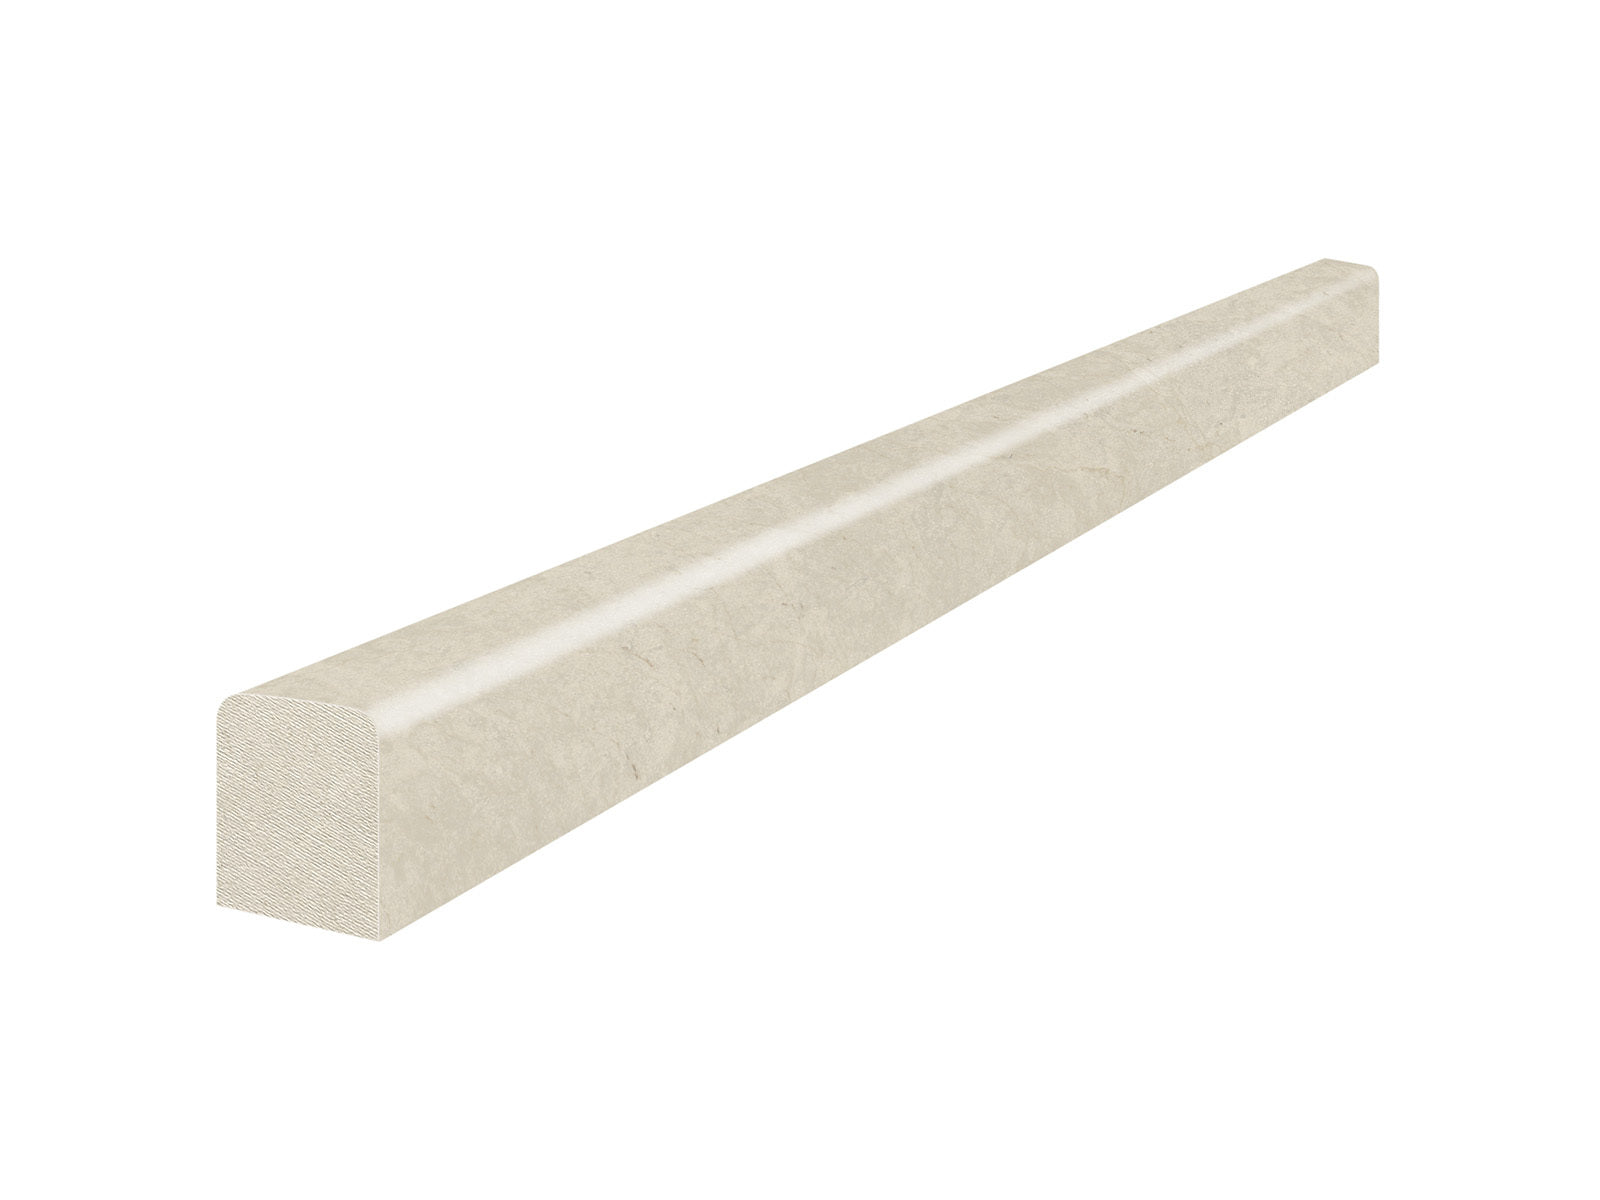 surface group anatolia limestone tierra halo natural stone deco bar molding honed straight edge bar 1_2х12